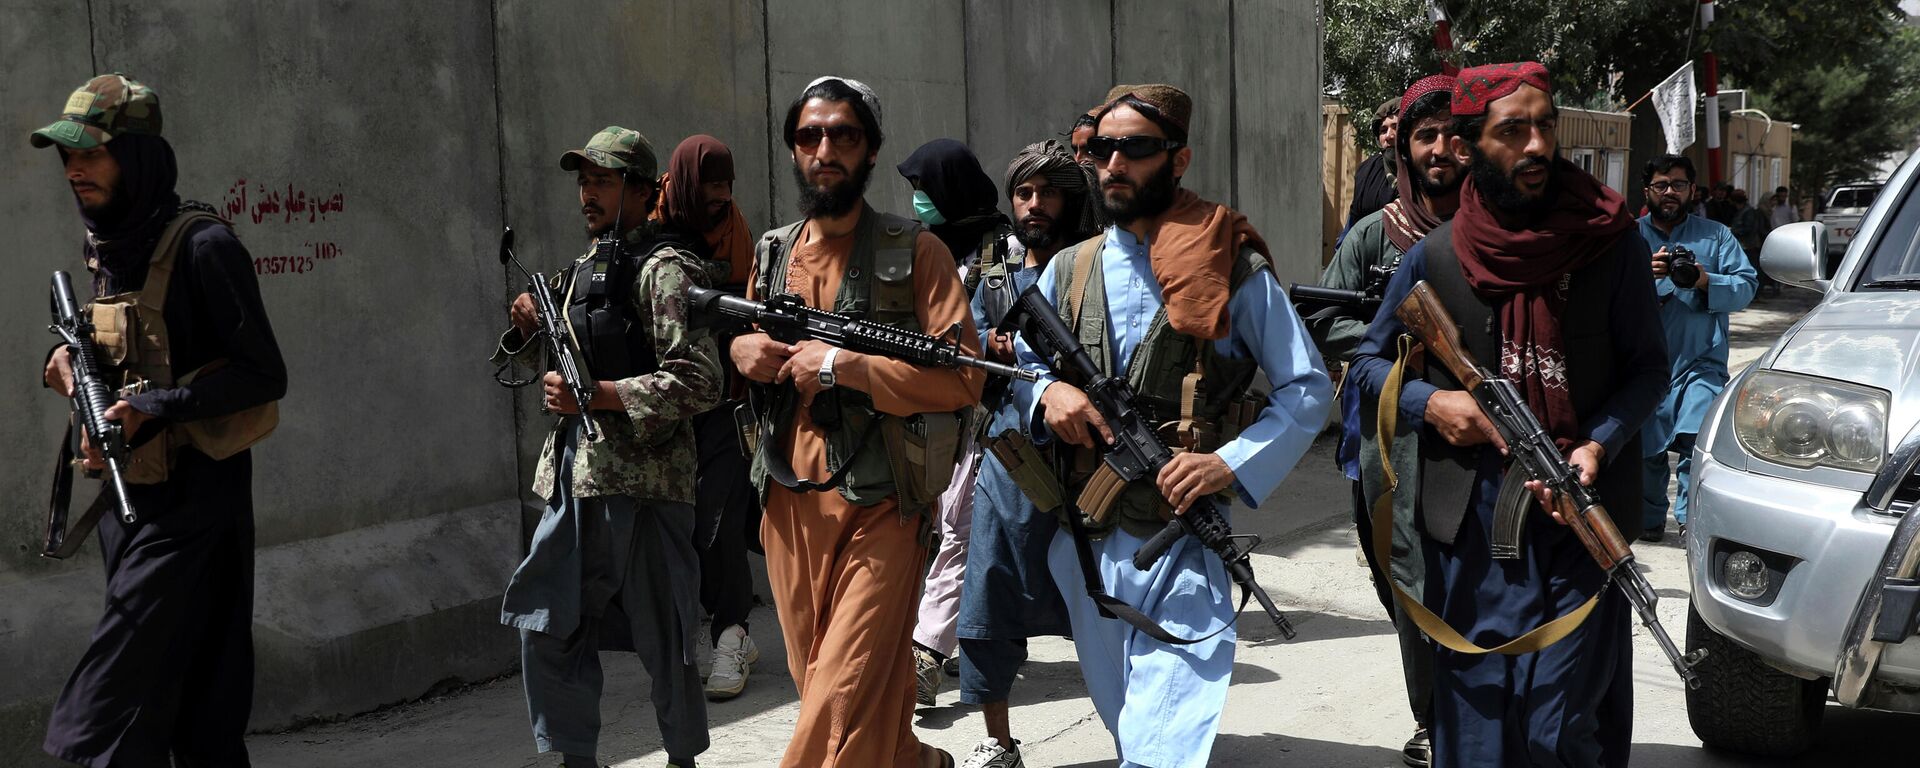 Боевики Талибана патрулируют район Вазир Акбар Хан в городе Кабул, Афганистан - Sputnik Грузия, 1920, 04.12.2021